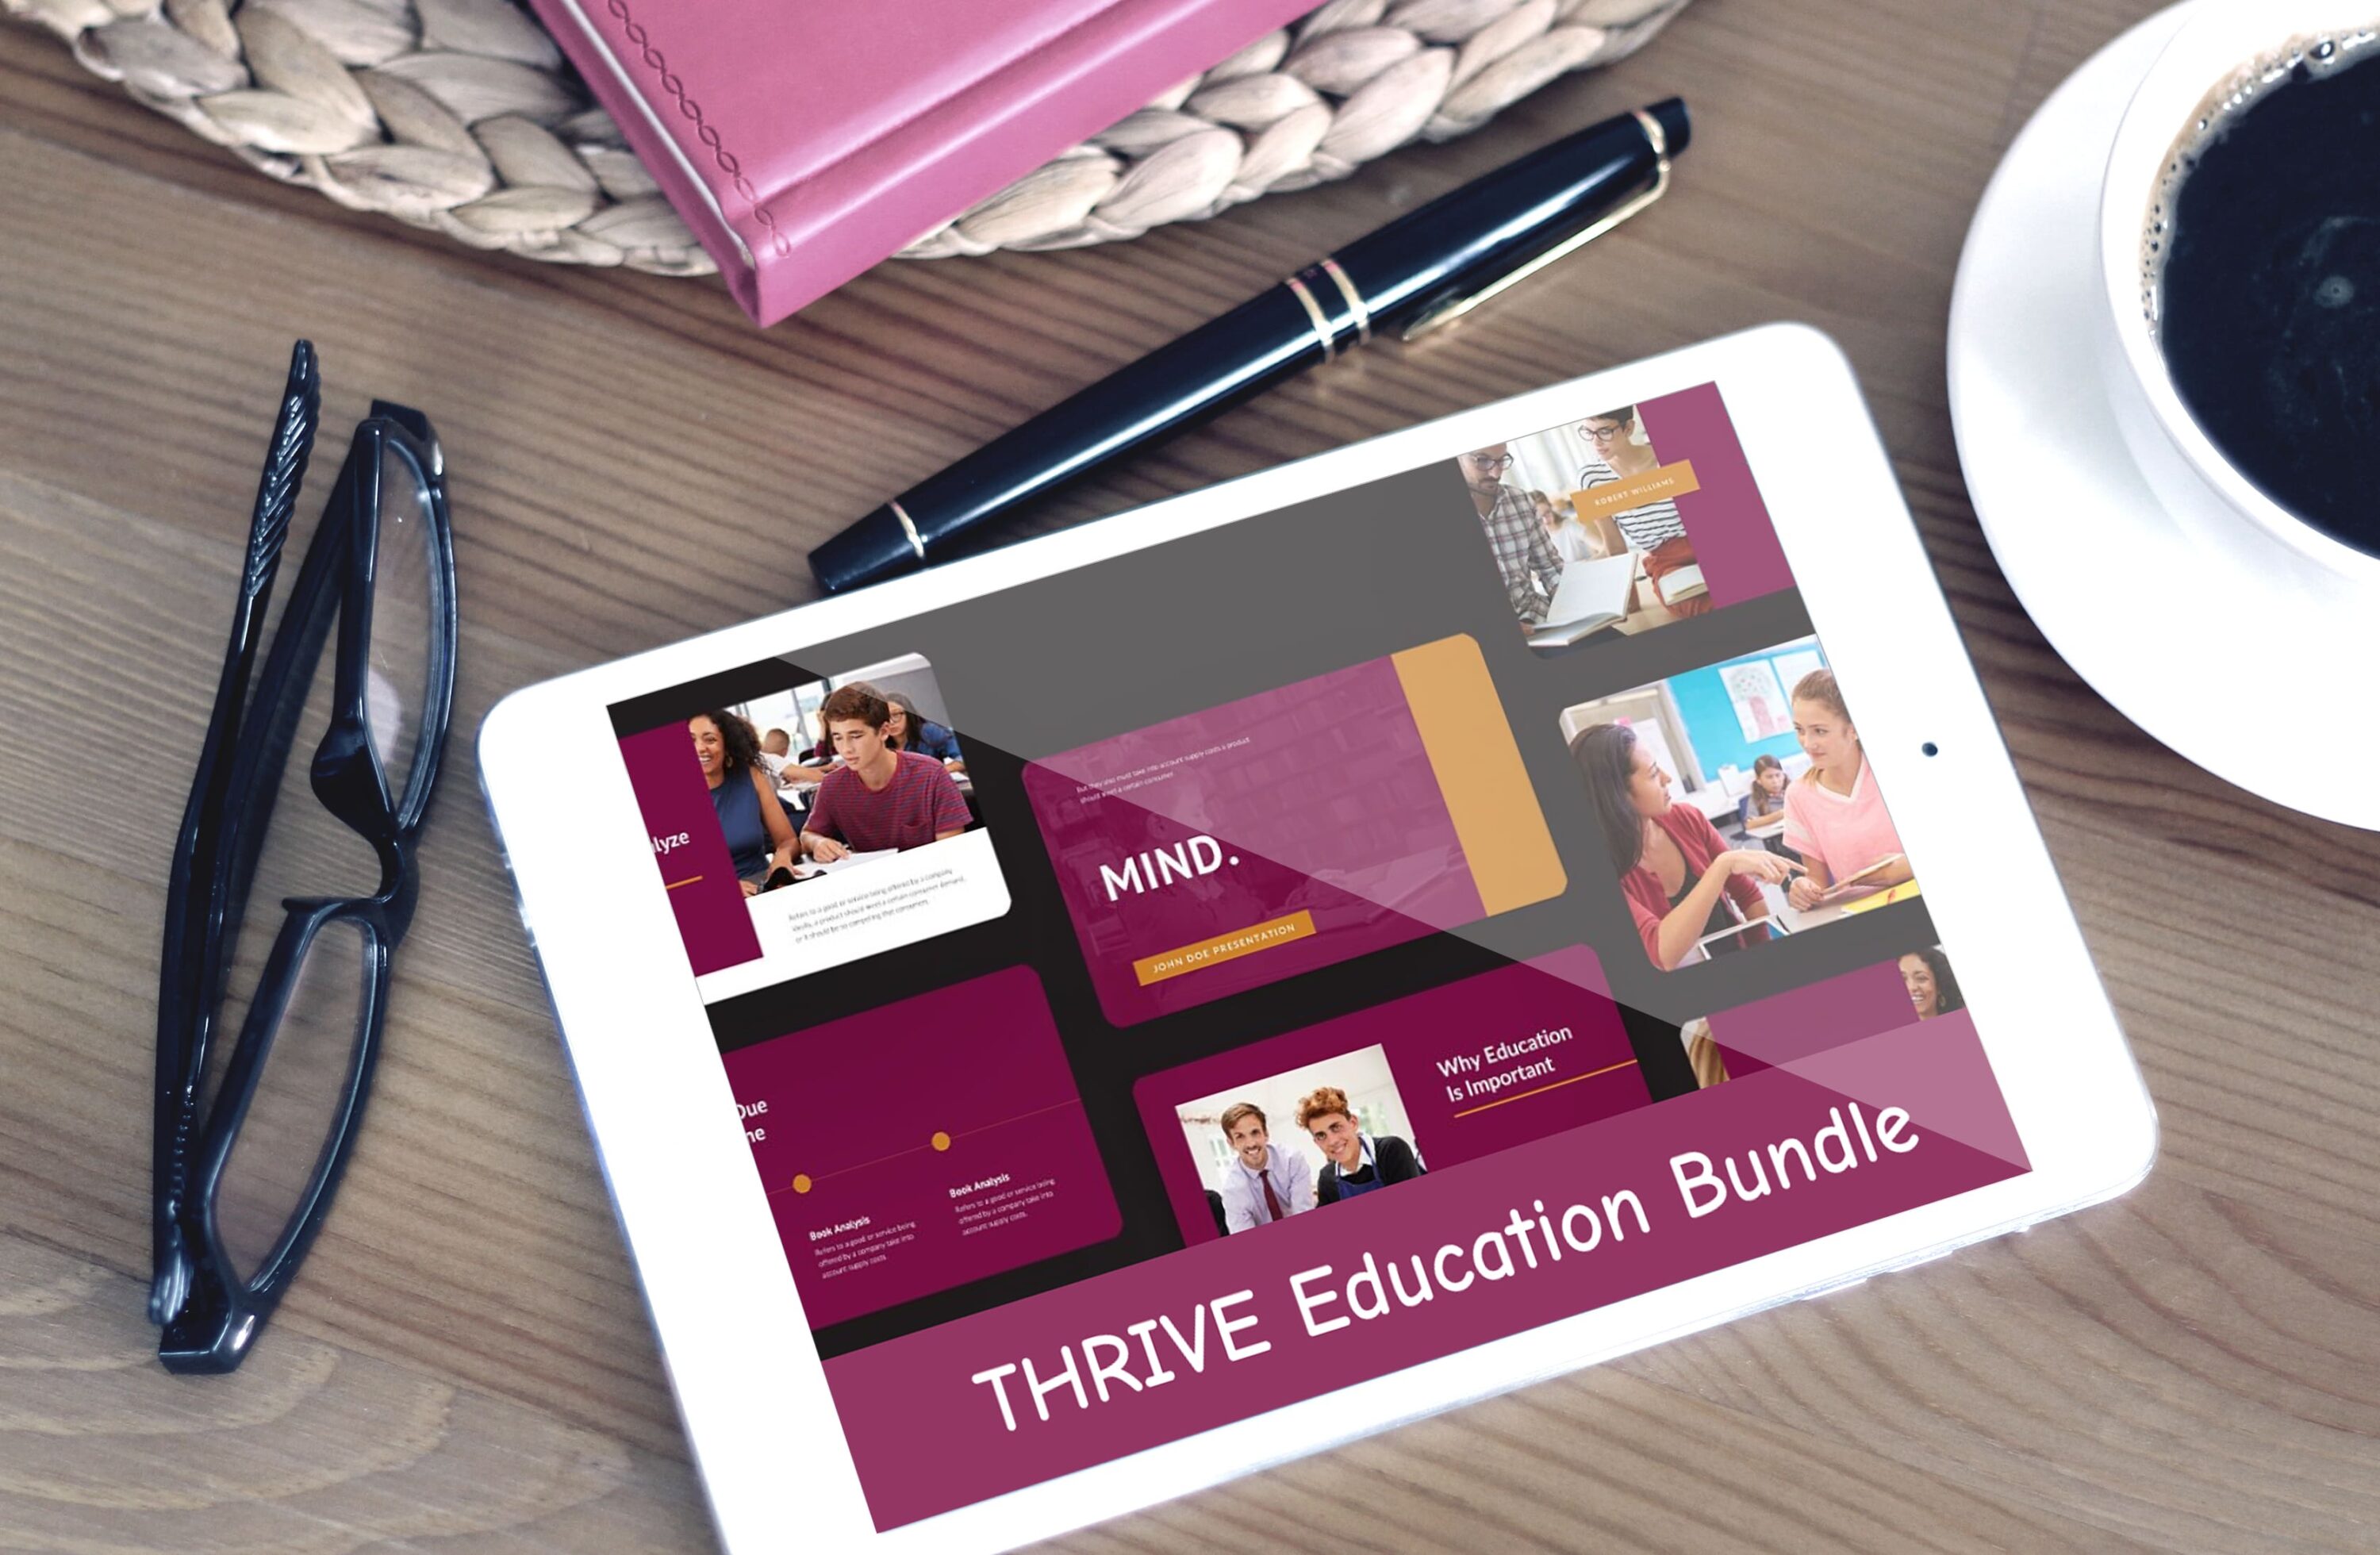 THRIVE Education Bundle - Mockup on Tablet.